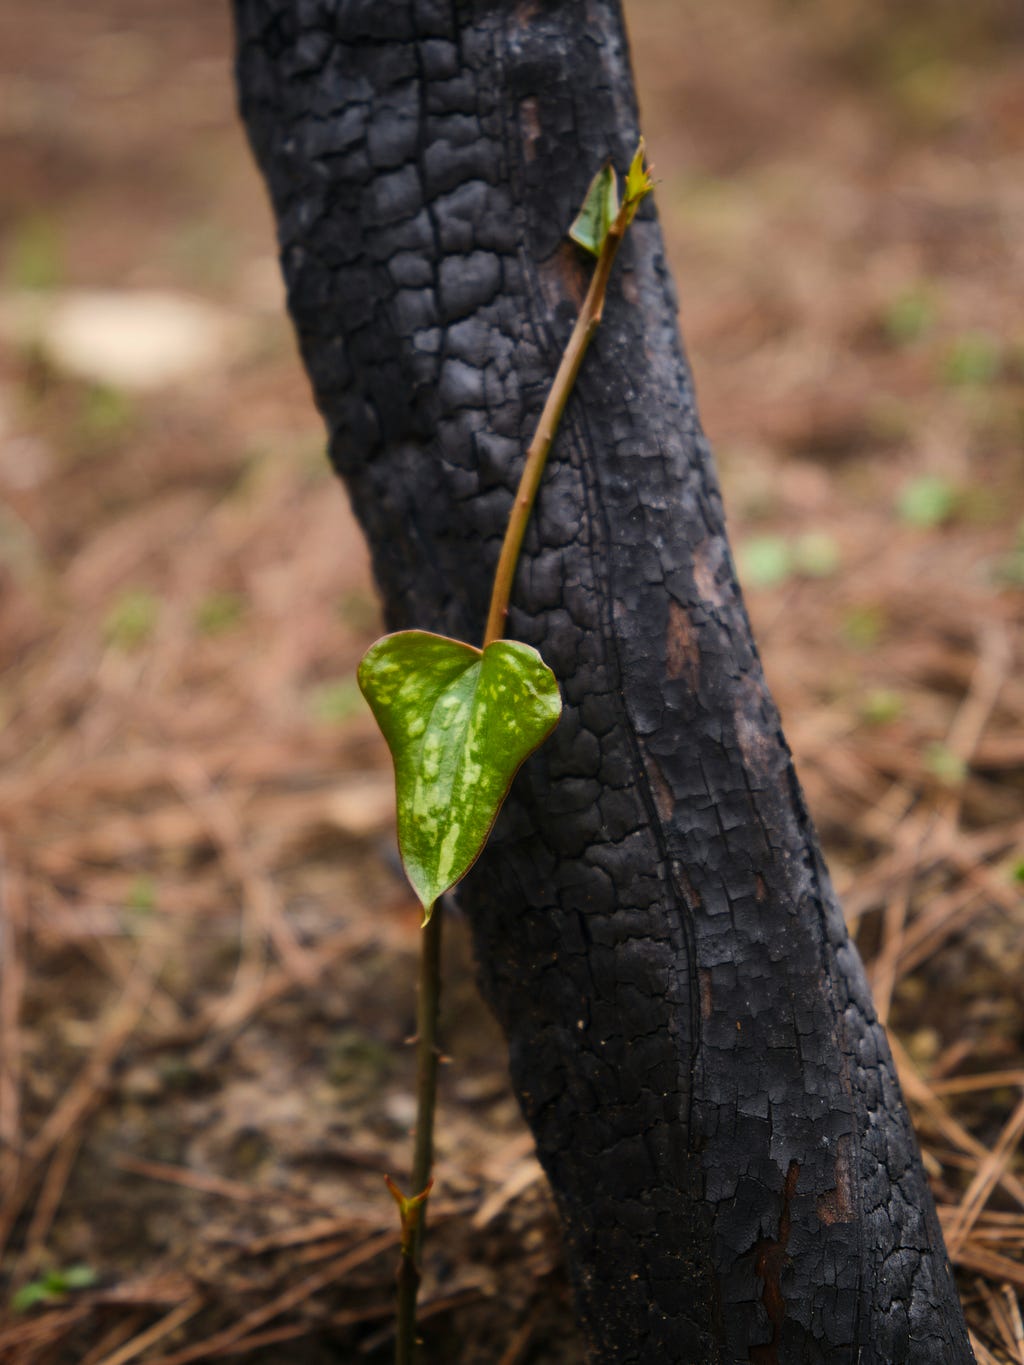 A new leaf against a charred tree